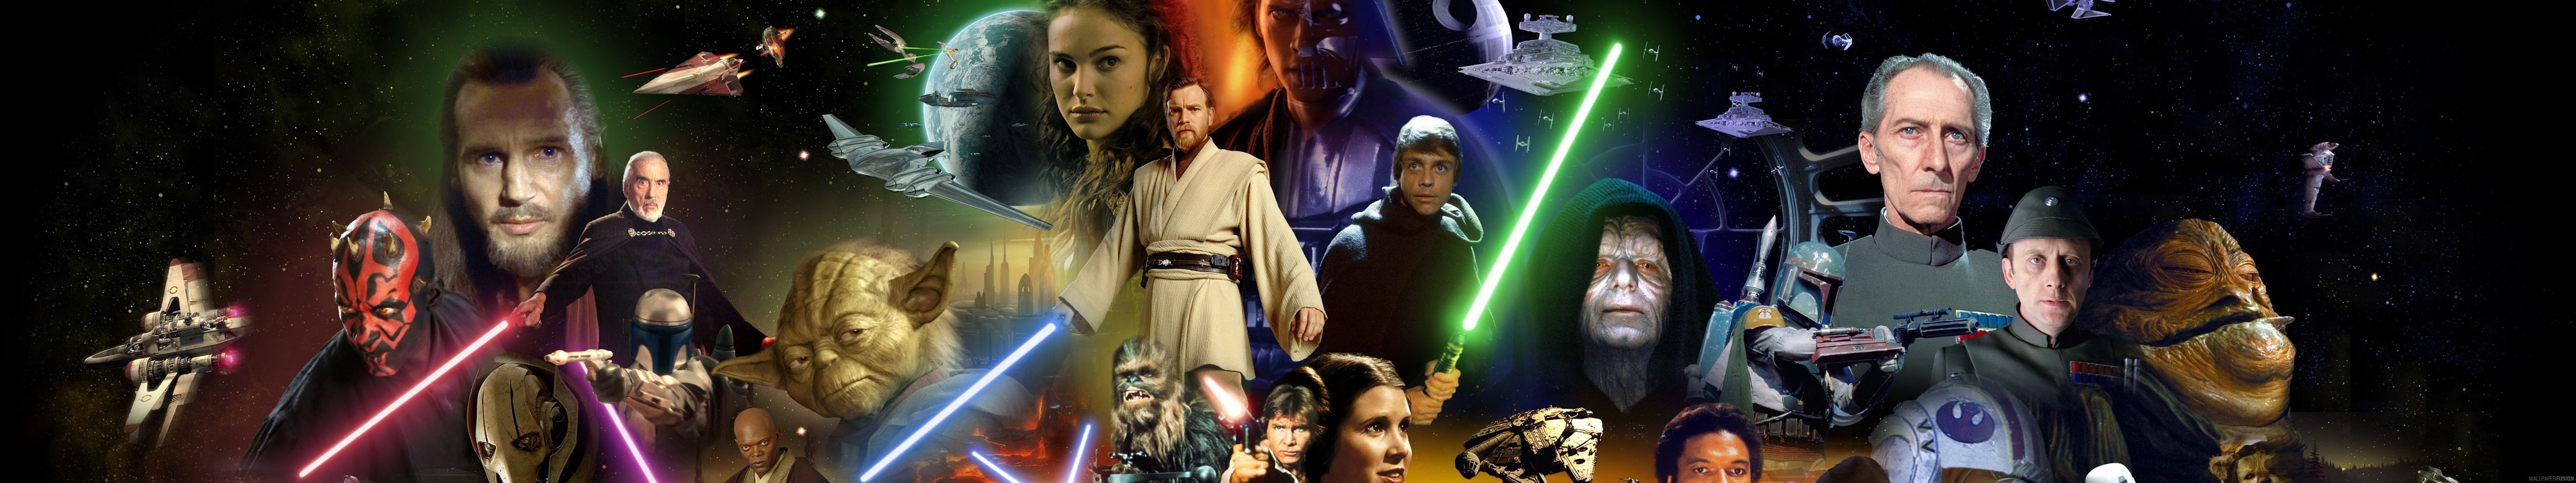 10 Top Star Wars Triple Monitor Wallpaper FULL HD 1080p For PC